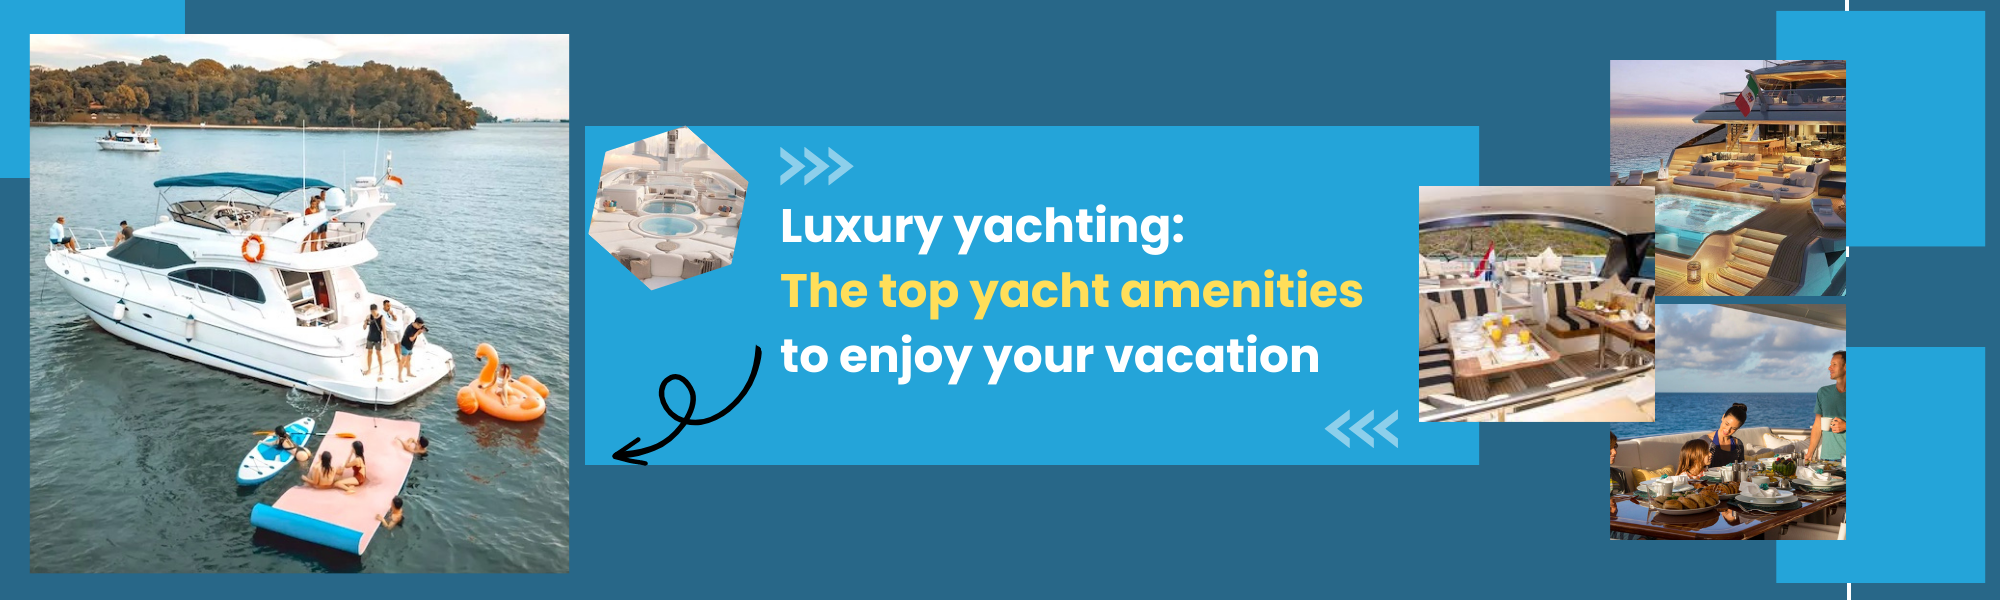 Luxury yachting in Dubai